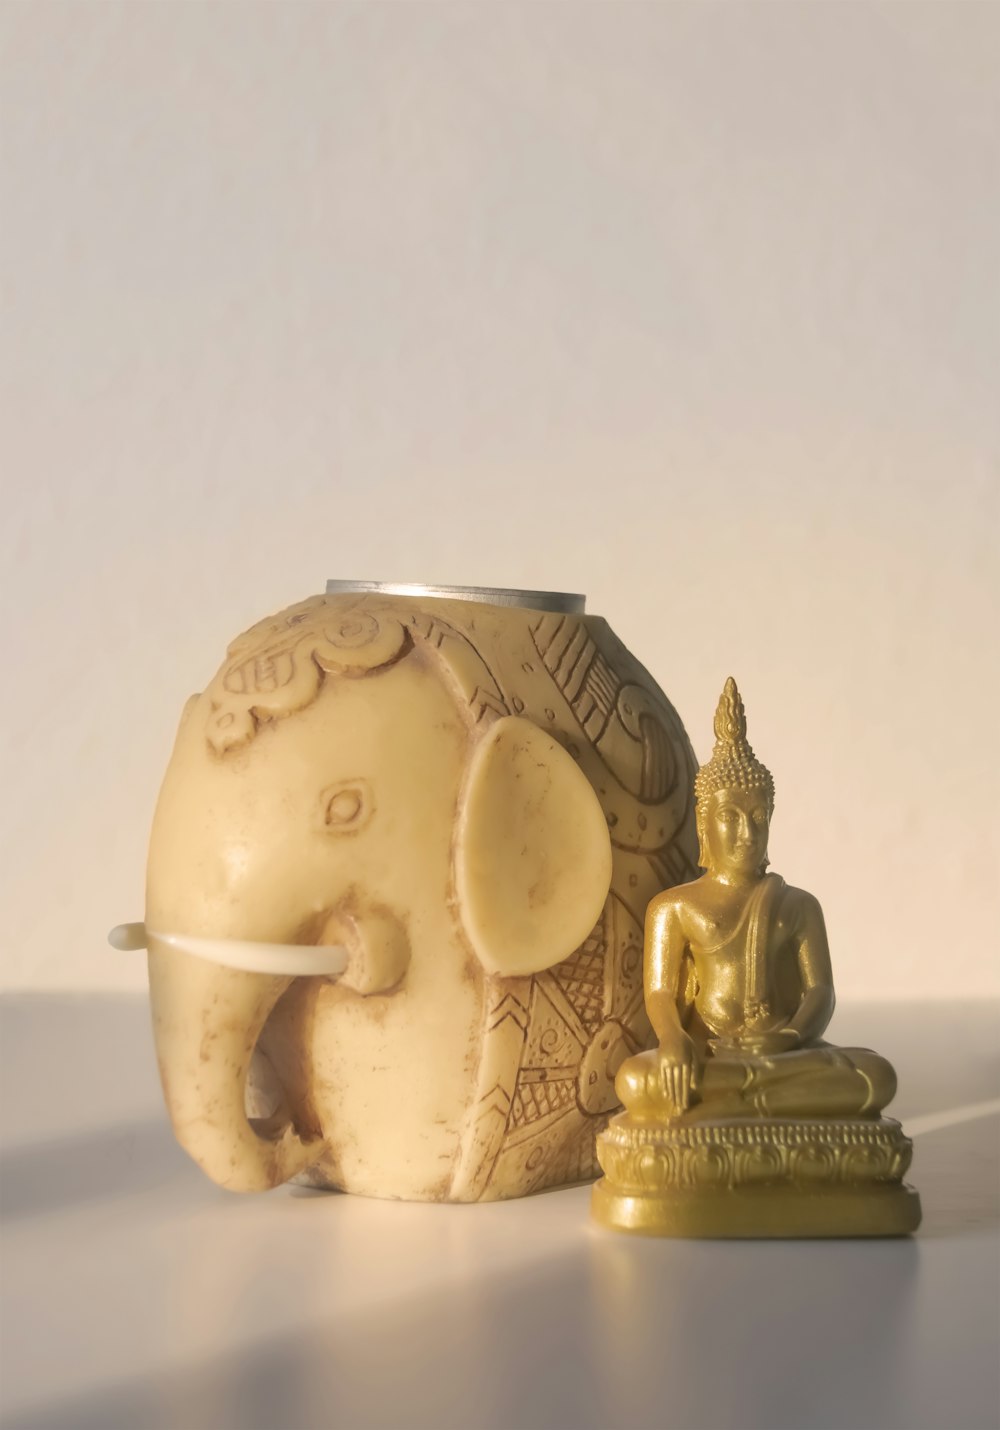 gold and white ceramic figurine